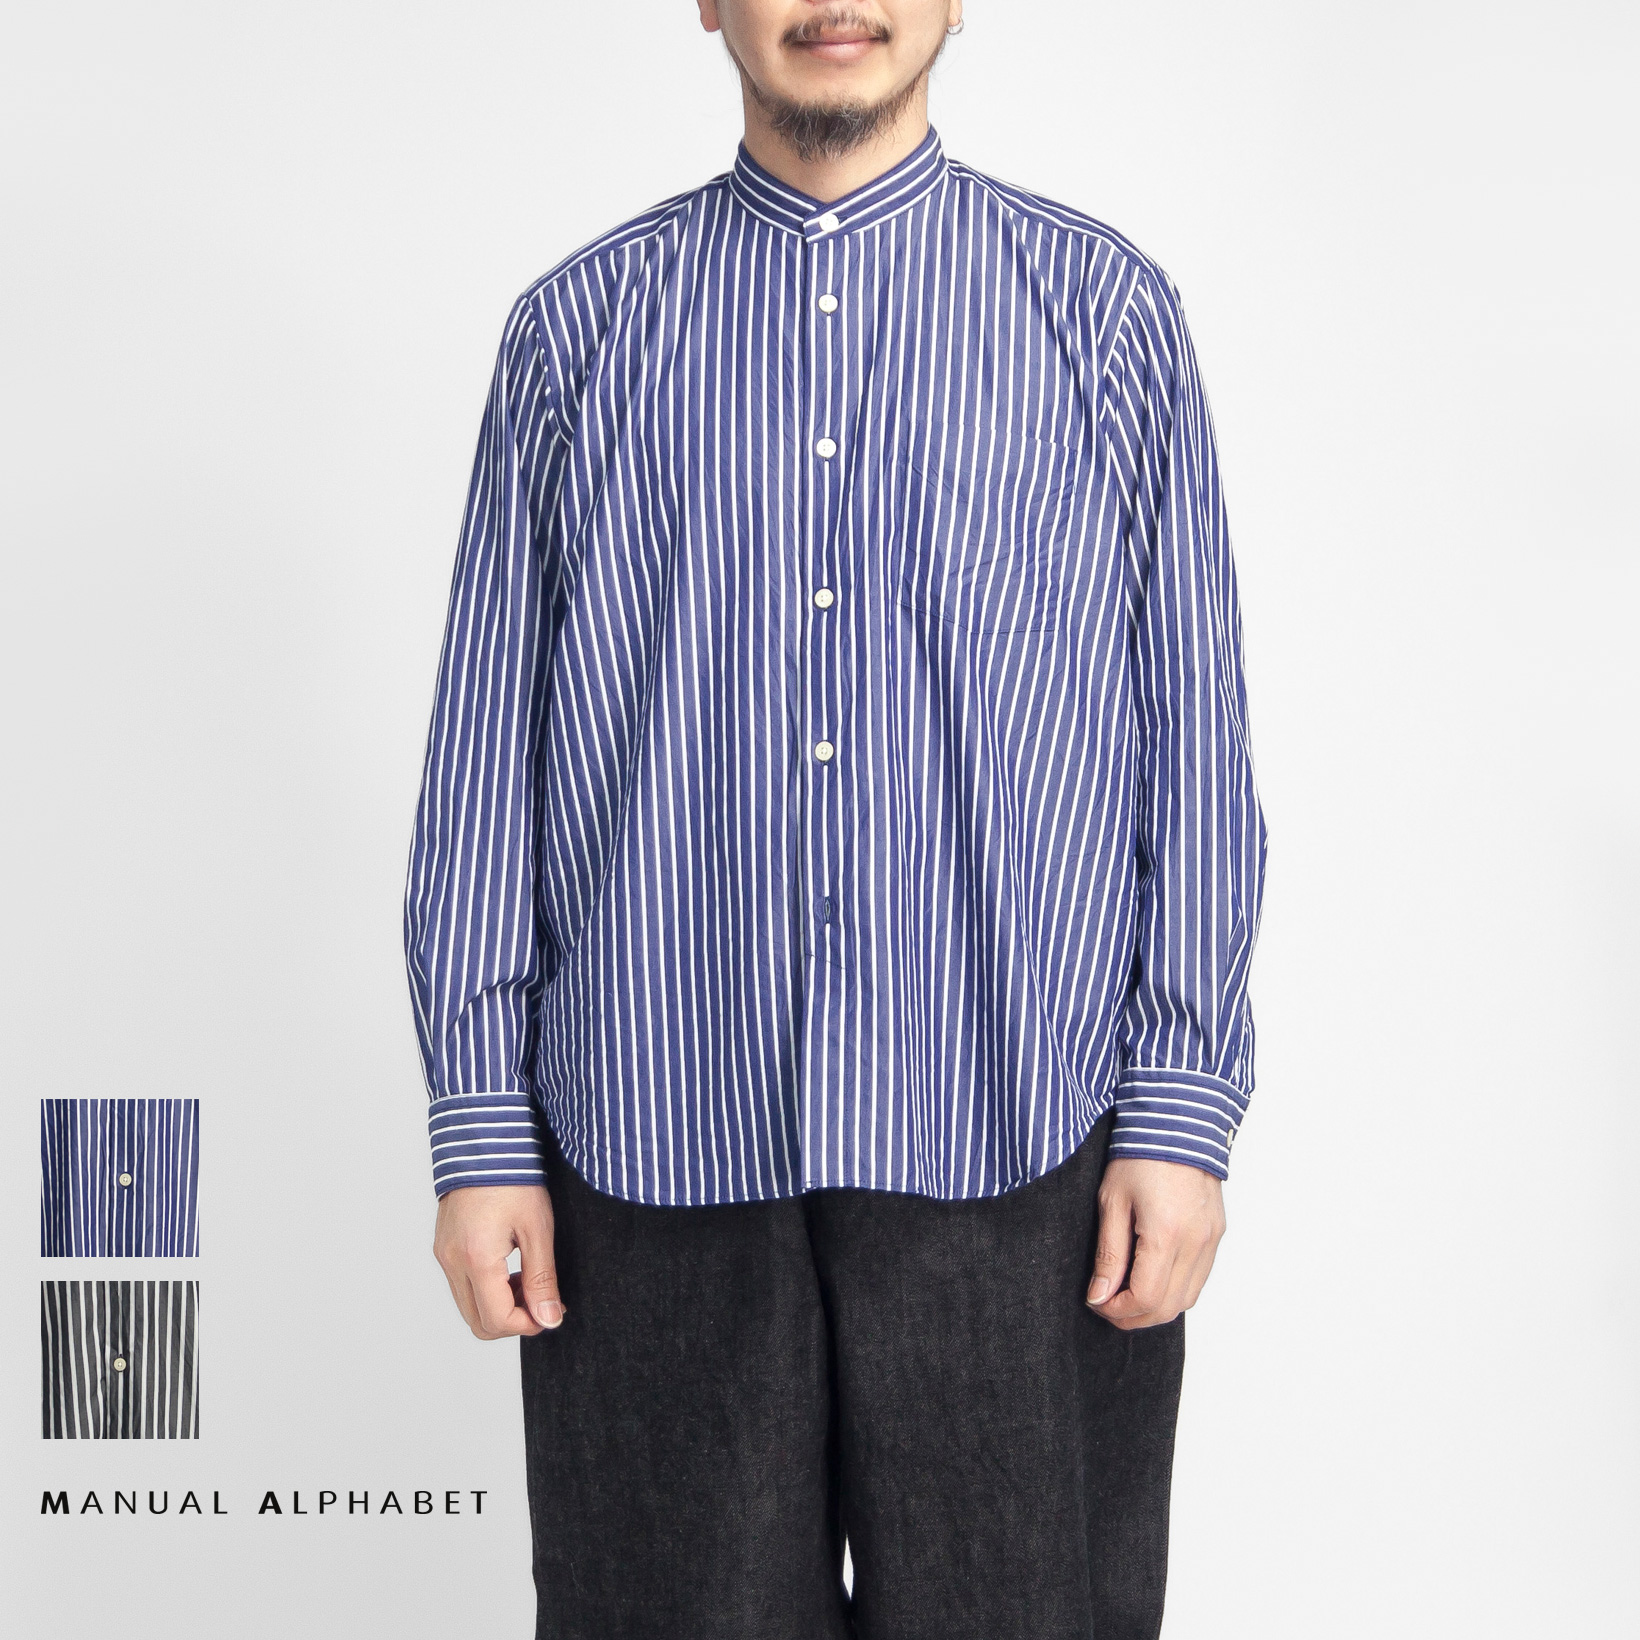 MANUAL ALPHABET マニュアルアルファベット スーピマ綿ストライプ ルーズフィット バンドカラーシャツ 日本製 メンズ